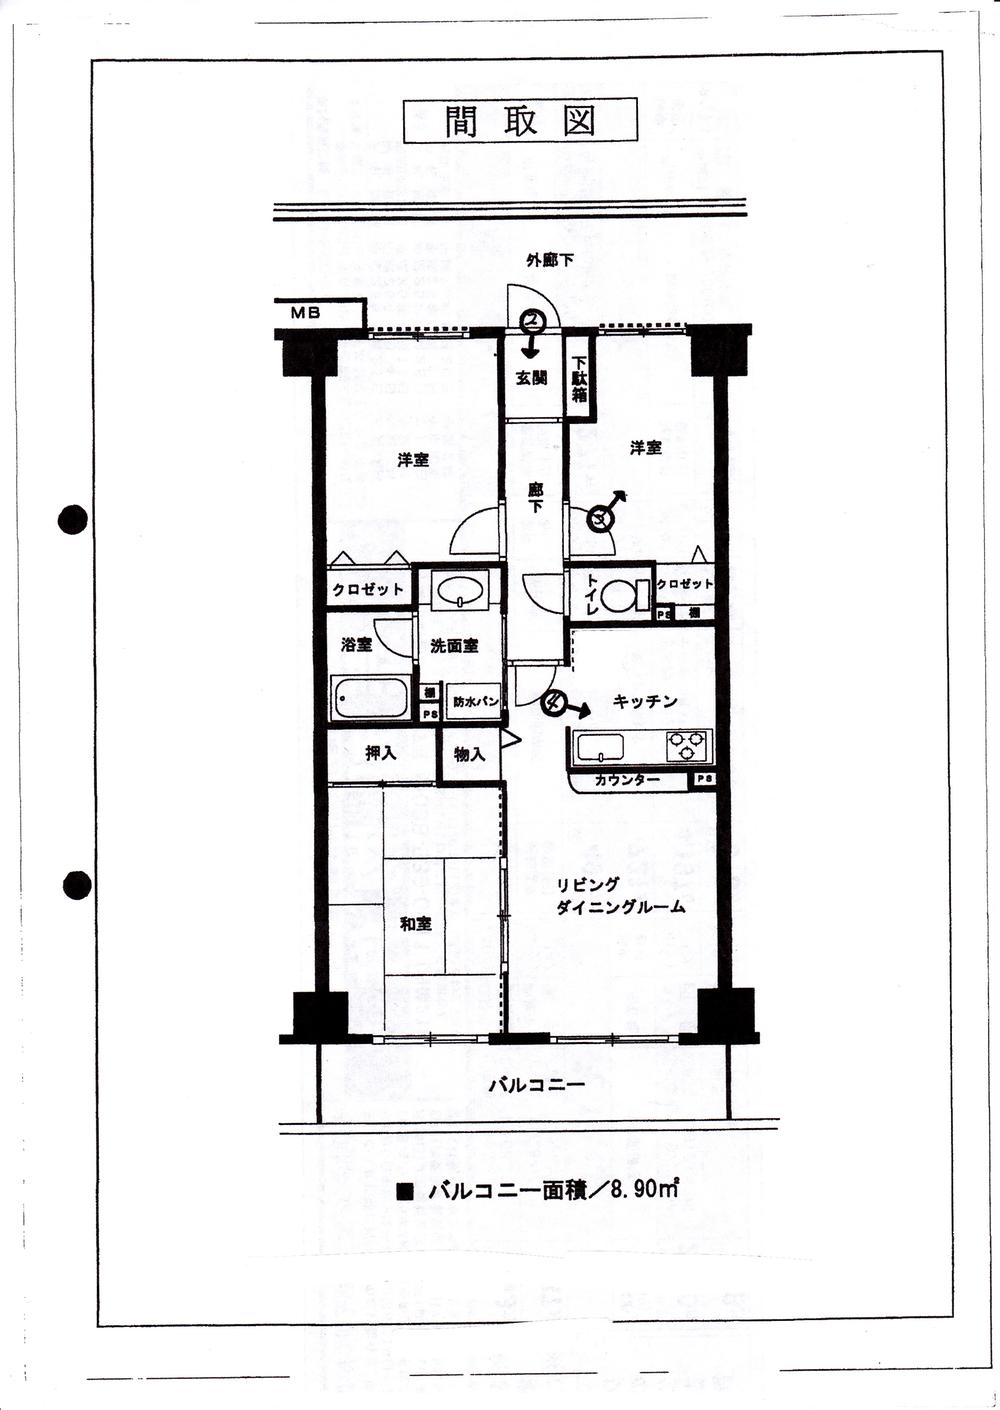 Floor plan. 3LDK, Price 8.8 million yen, Footprint 63.6 sq m , Balcony area 9 sq m floor plan